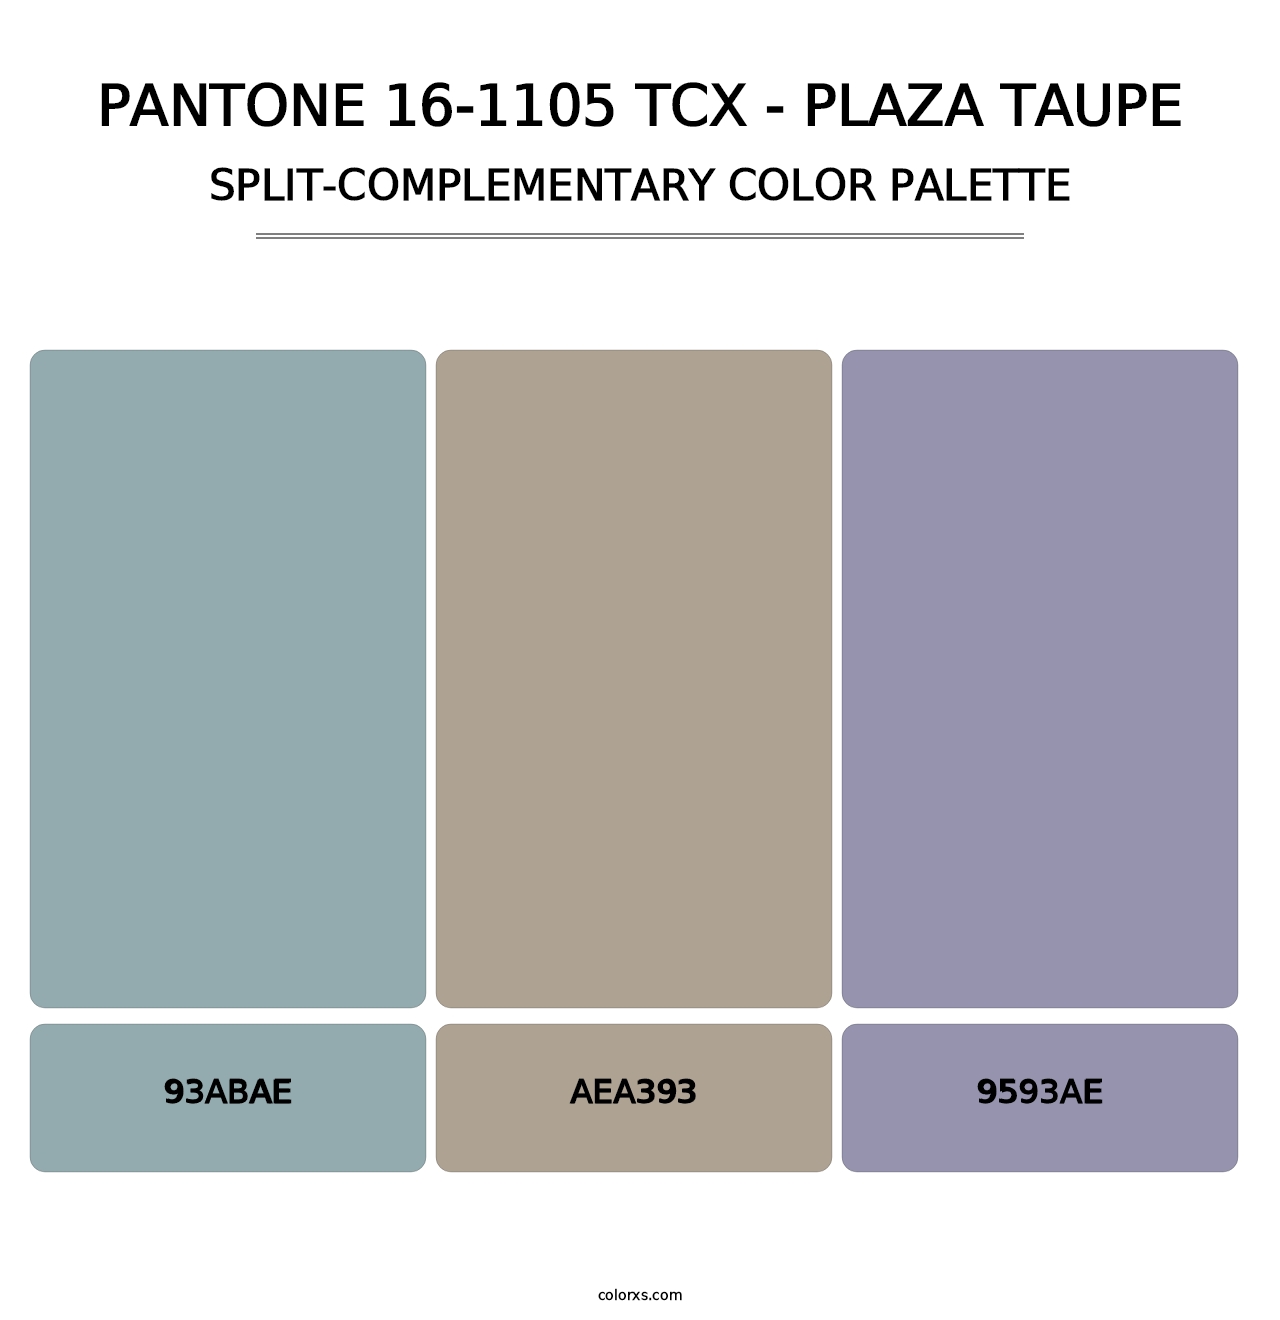 PANTONE 16-1105 TCX - Plaza Taupe - Split-Complementary Color Palette